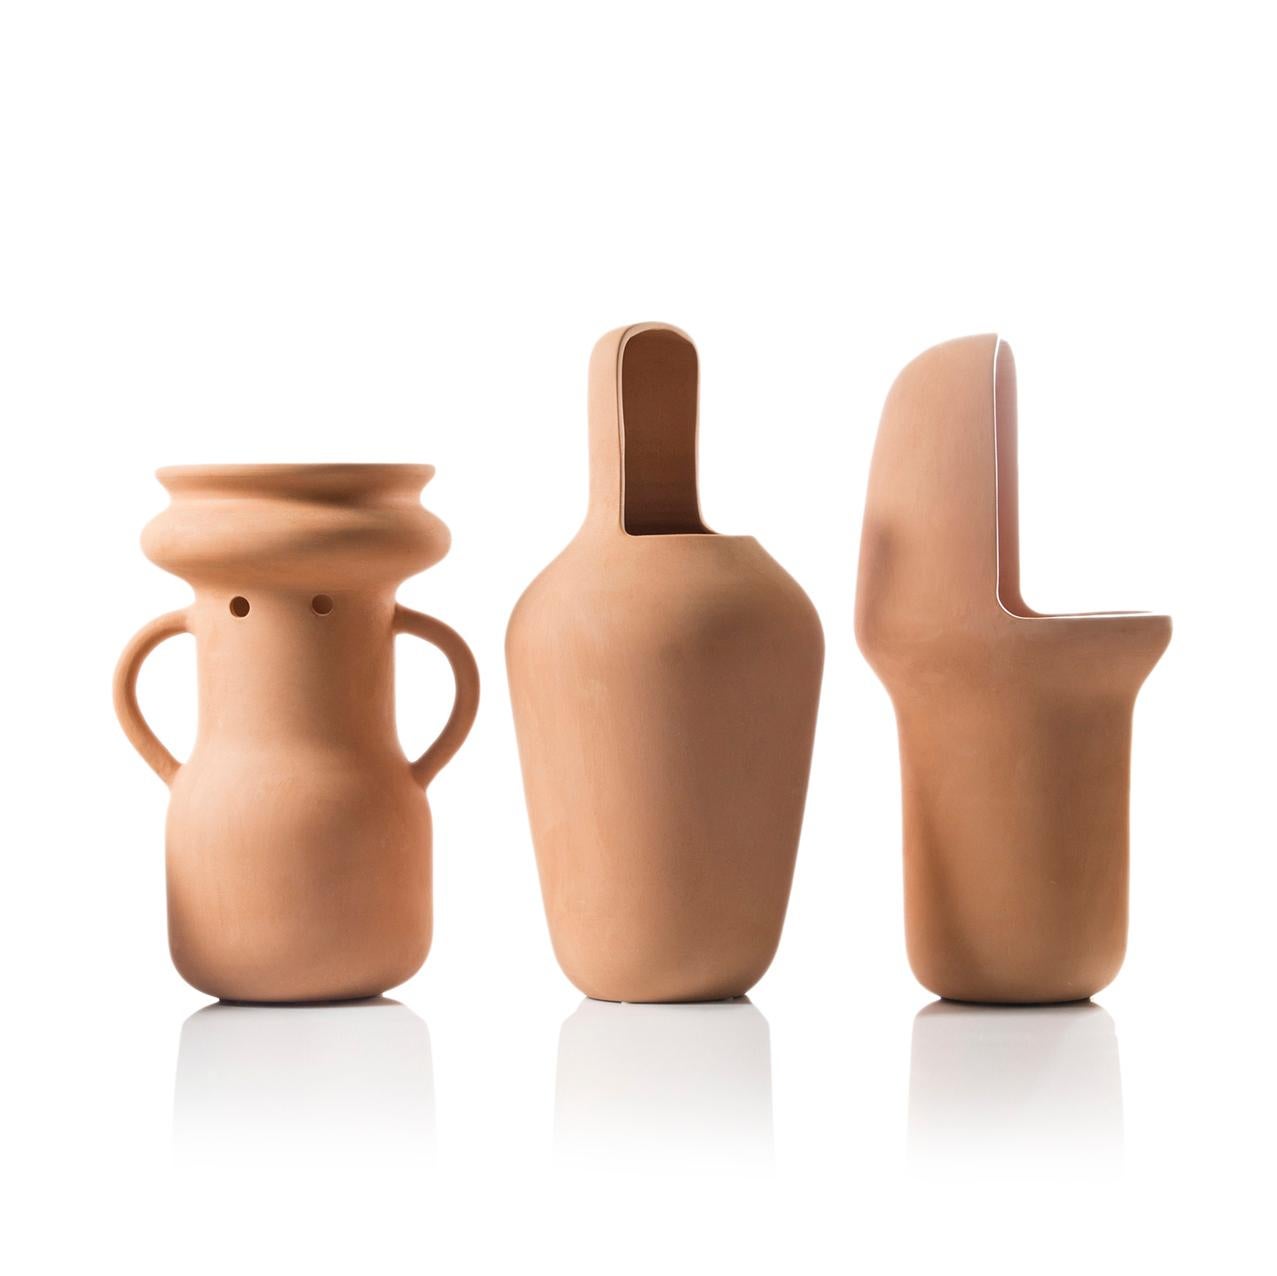 Spanish Jaime Hayon Contemporary Terracotta Set of Gardenias Big Vases